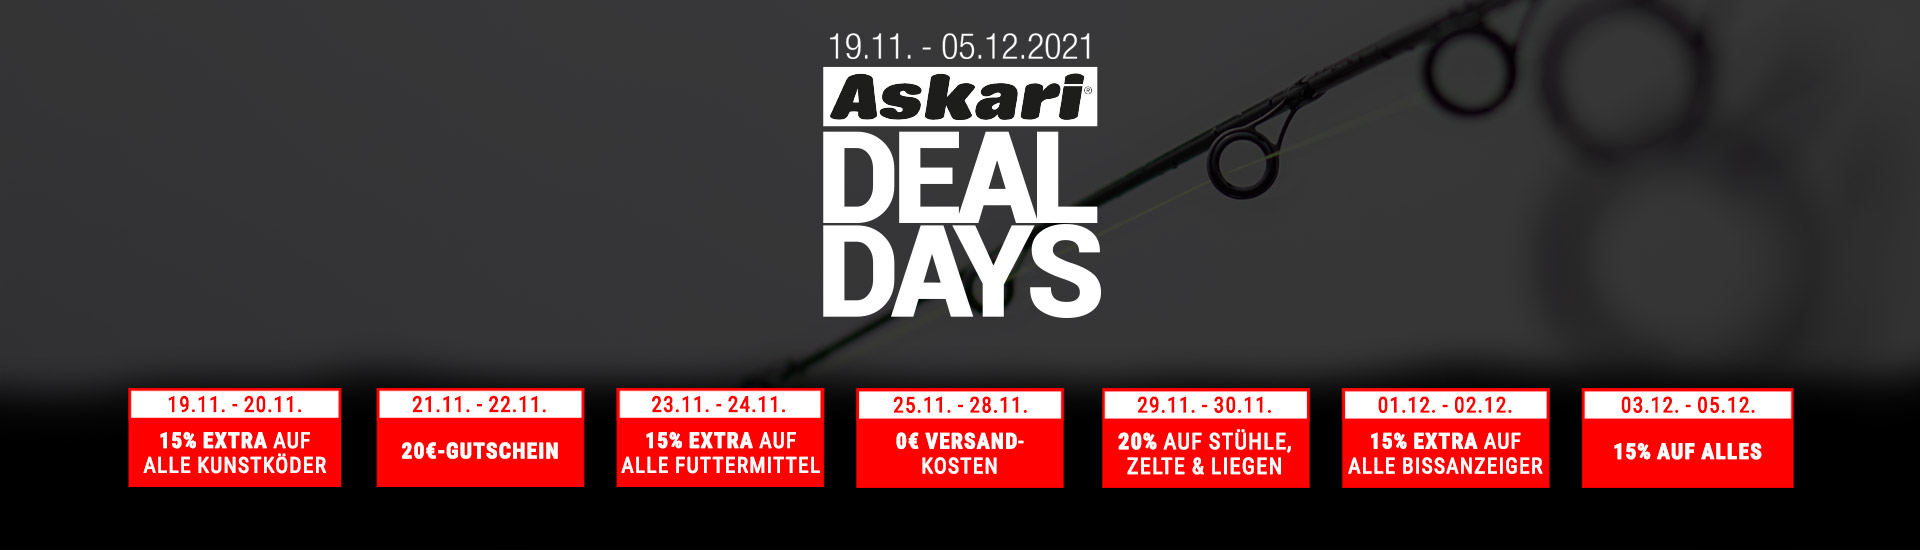 Askari Deal Days Bedingungen